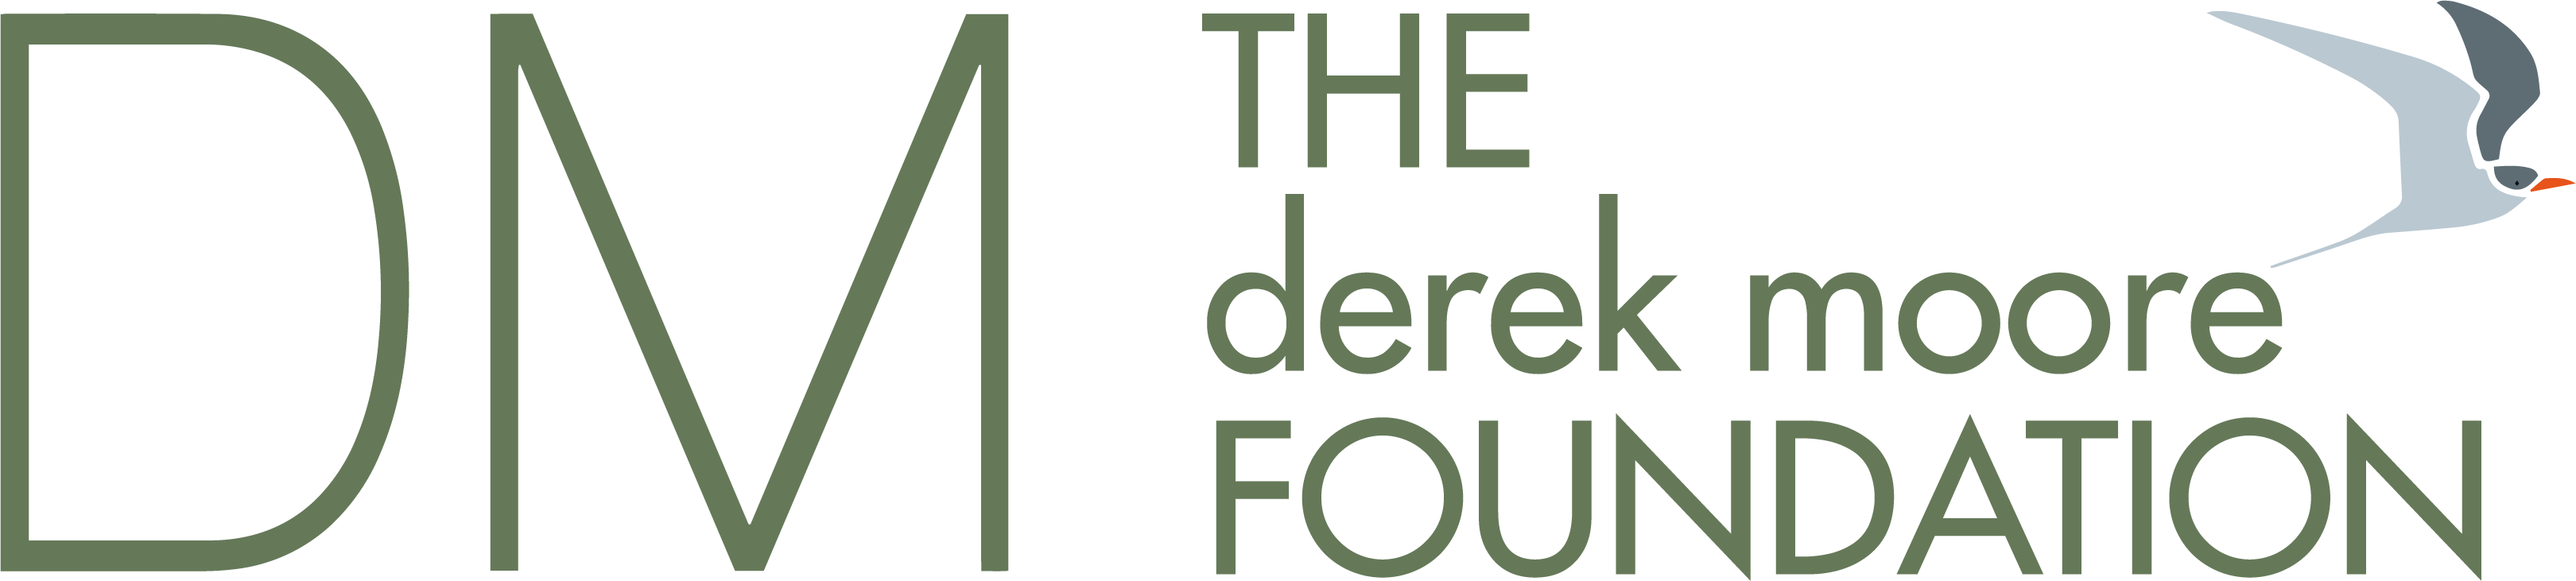 The Derek Moore Foundation